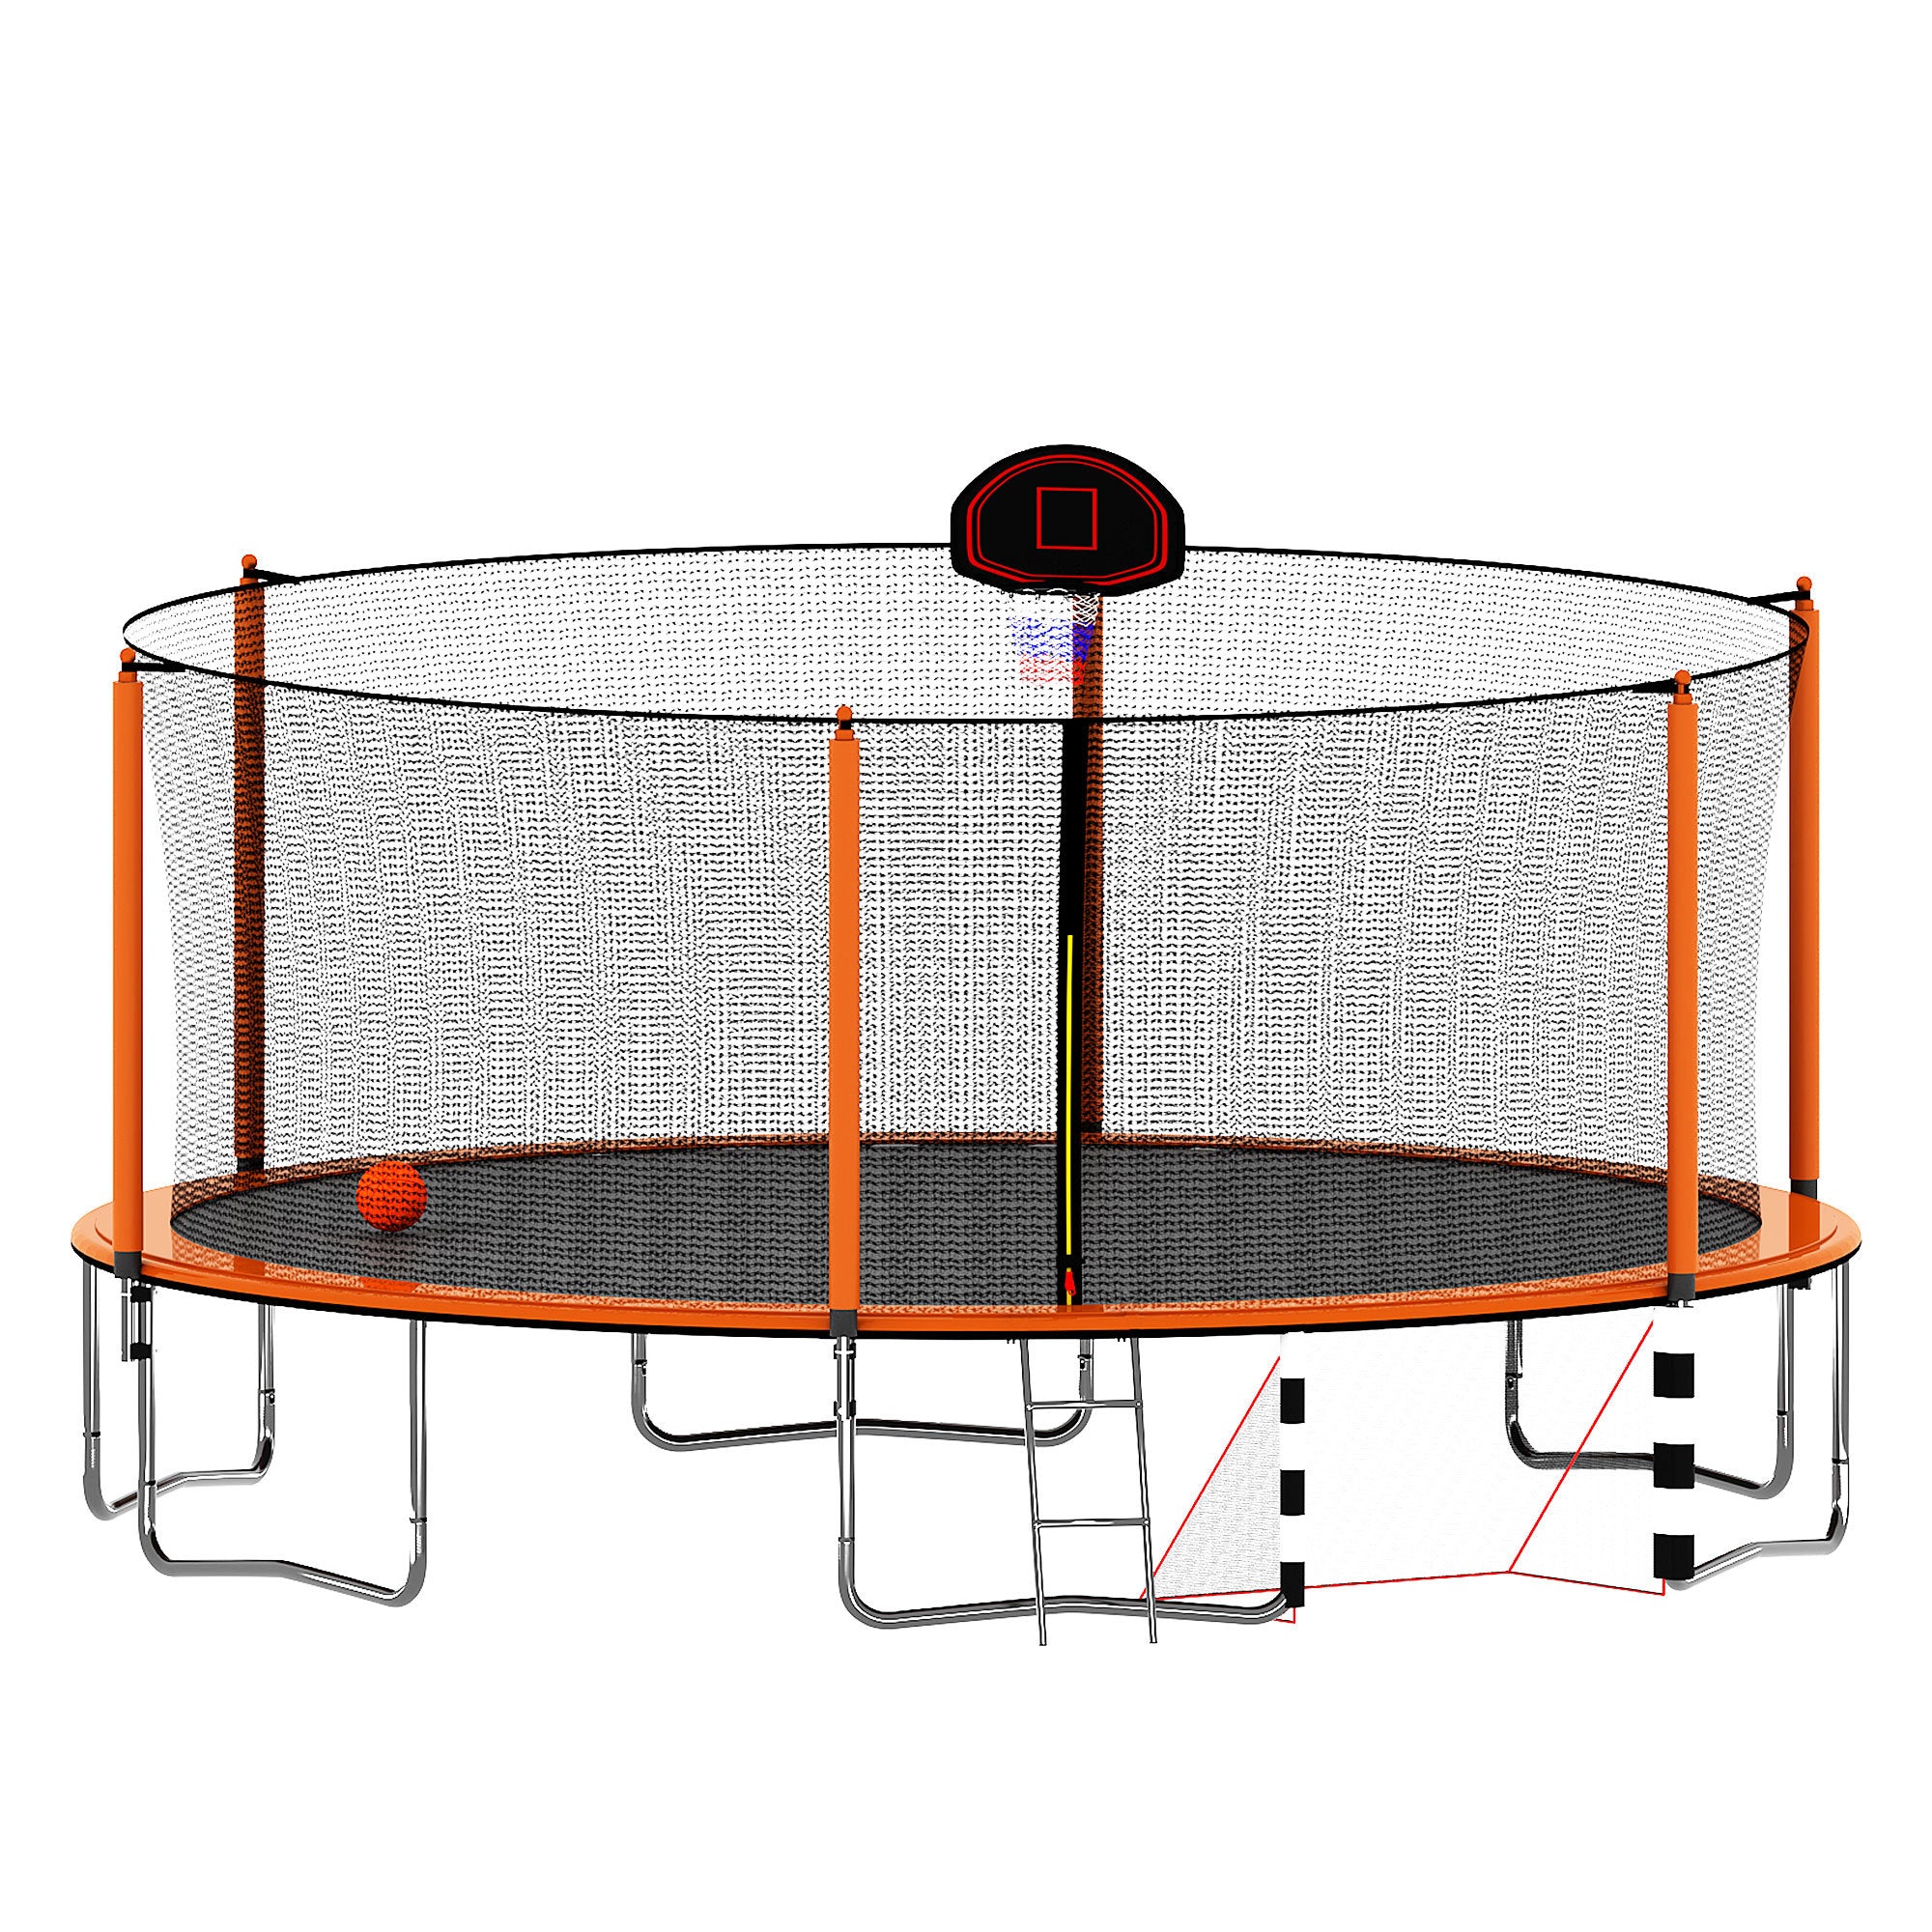 16FT Trampoline with Basketball Hoop pump and Ladder orange-steel